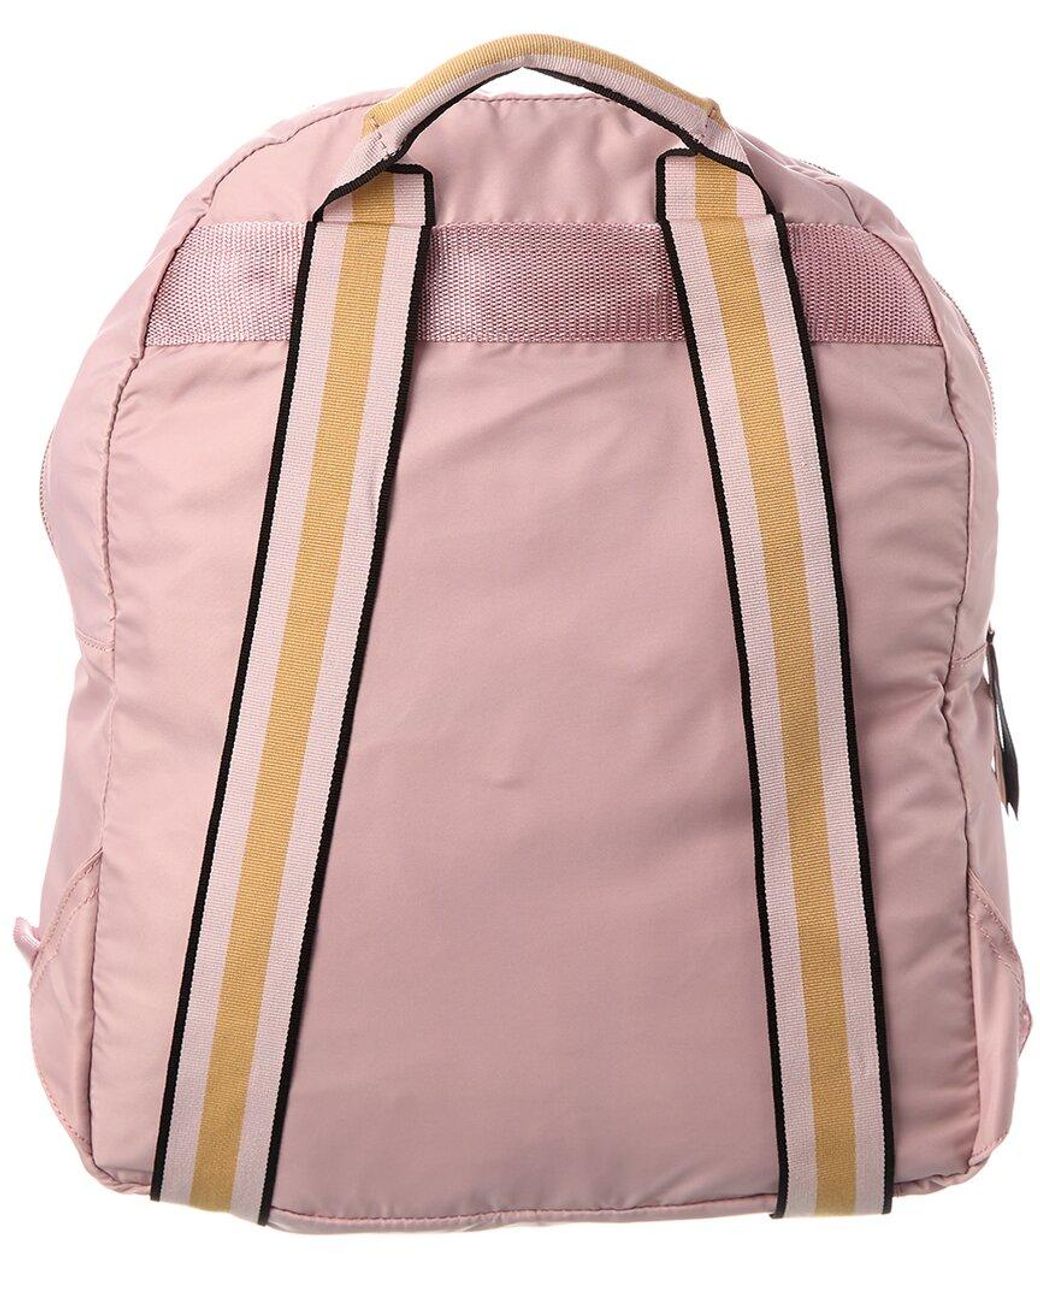 Ted Baker Ivarc Nylon Backpack in Pink | Lyst